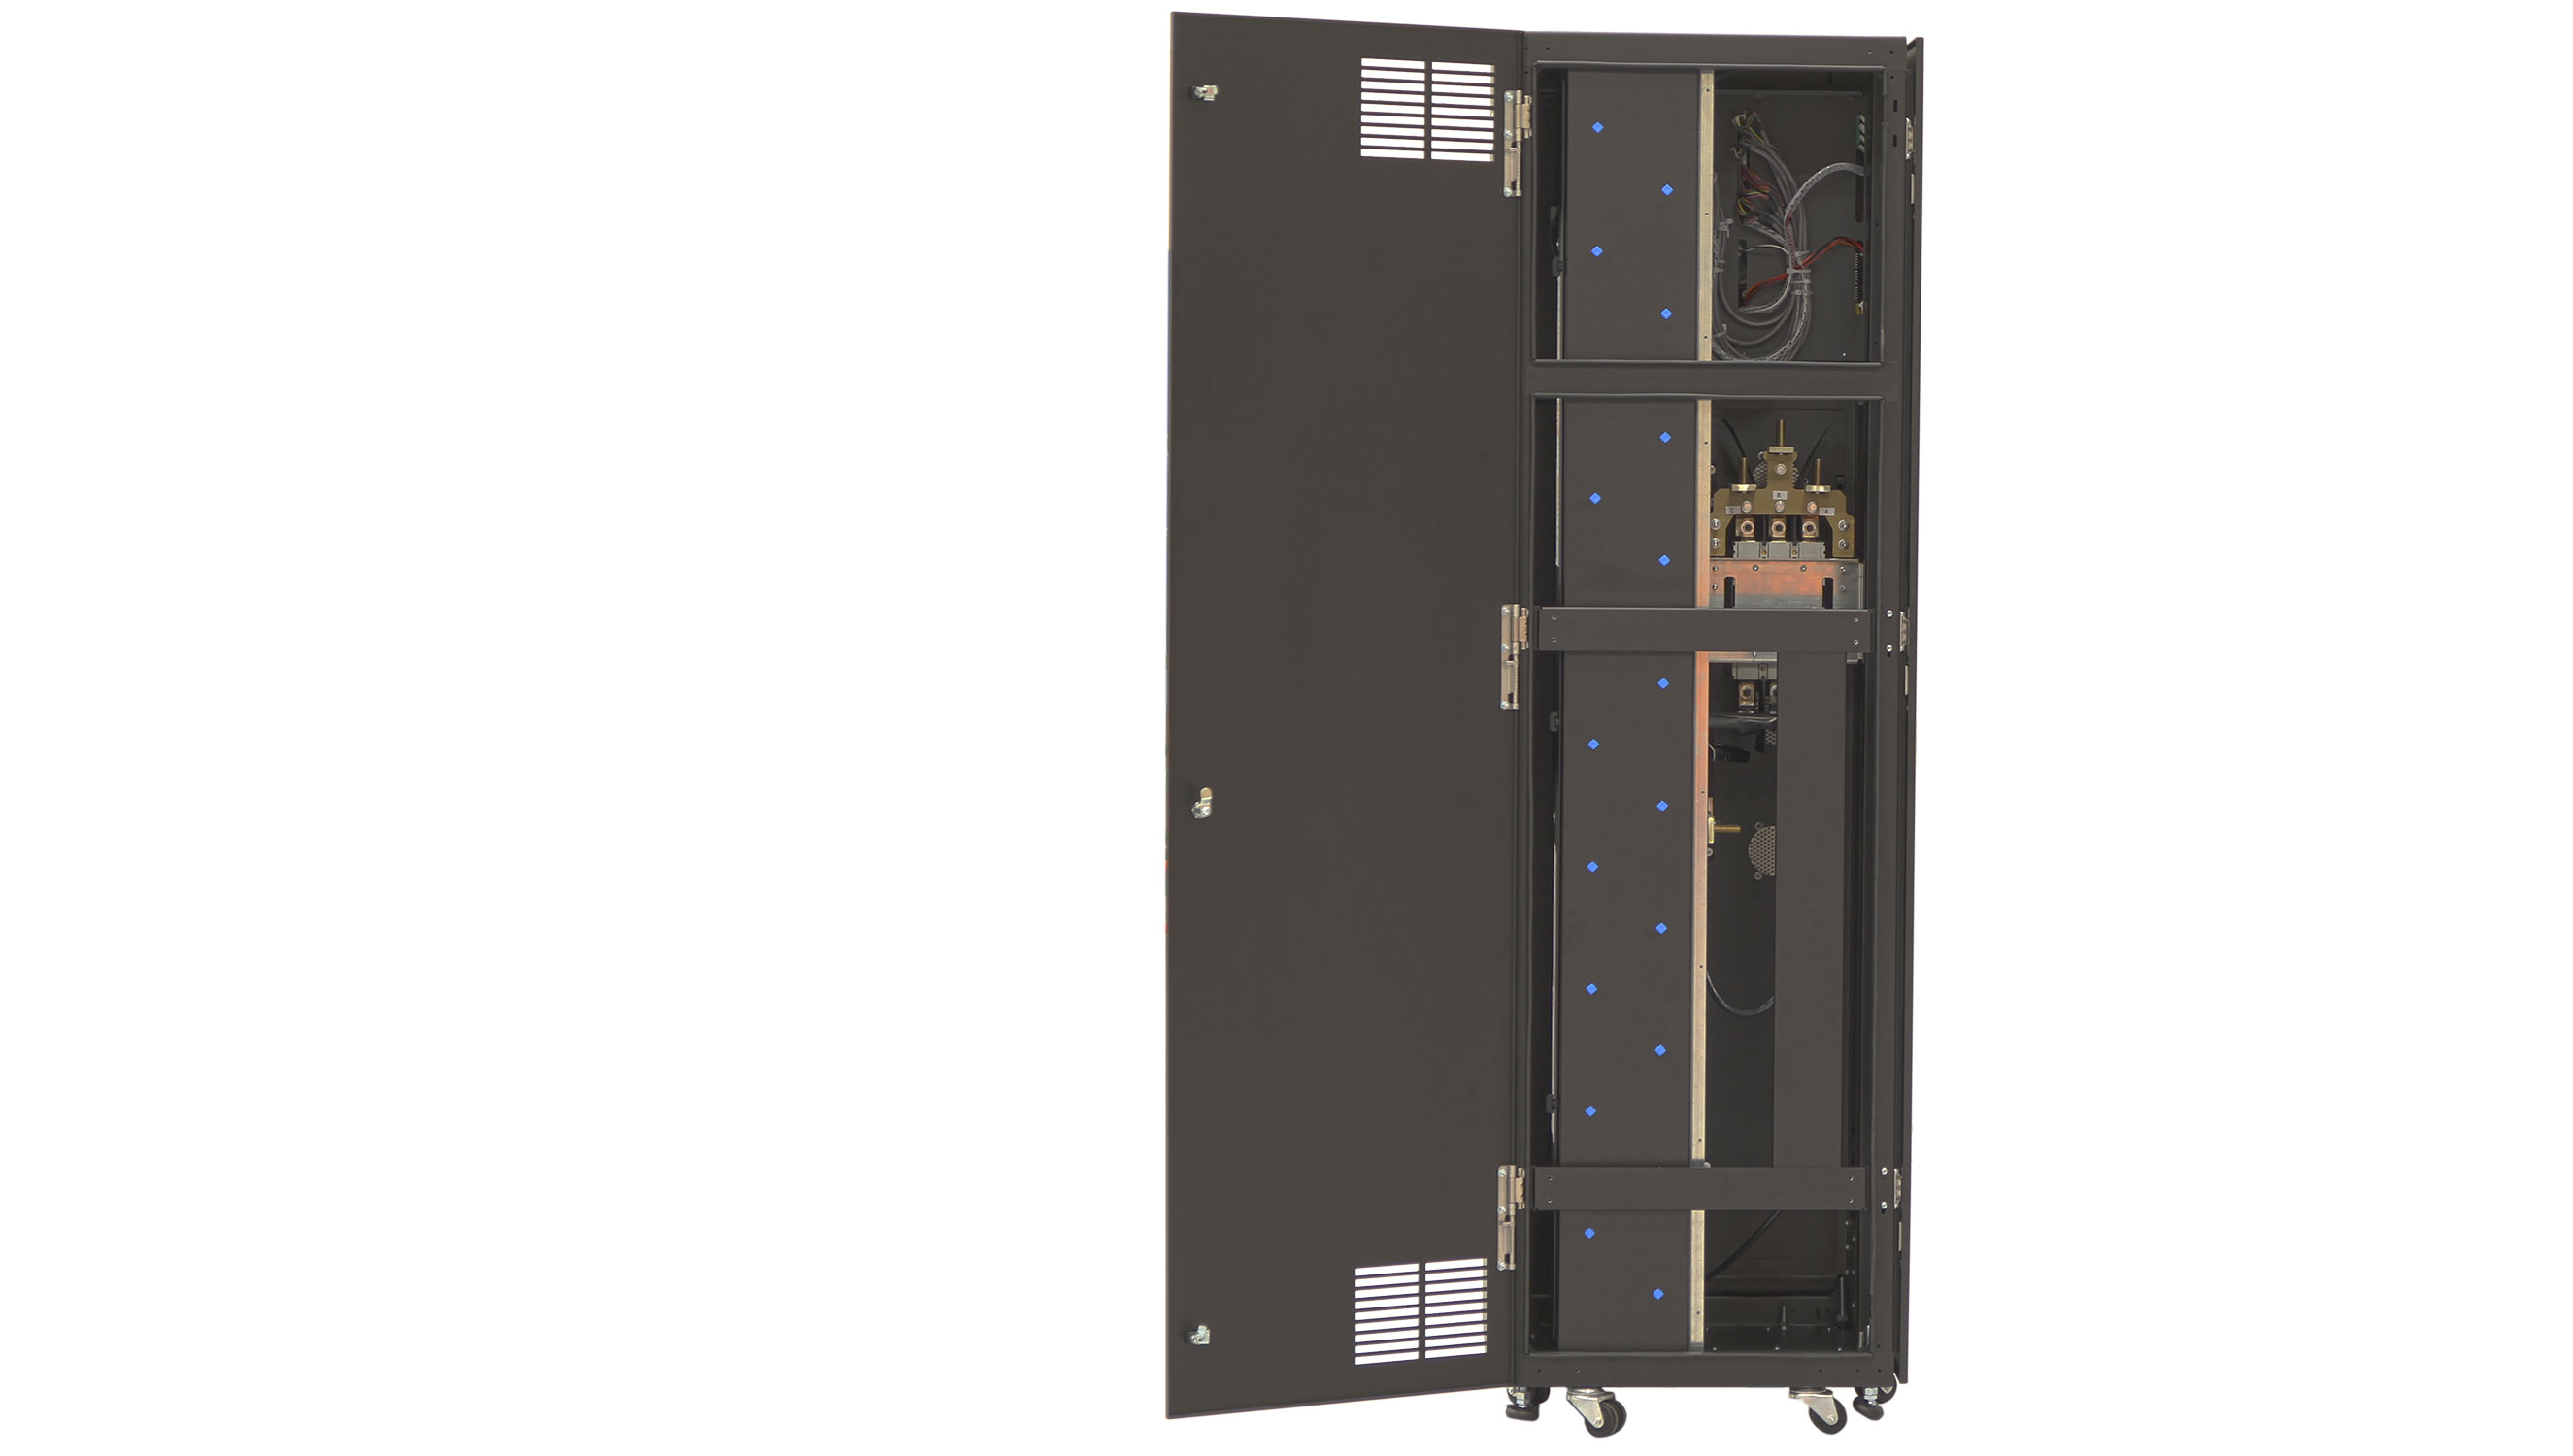 eRPP-FS Mechanical Overview, Rear - Outer Door Open